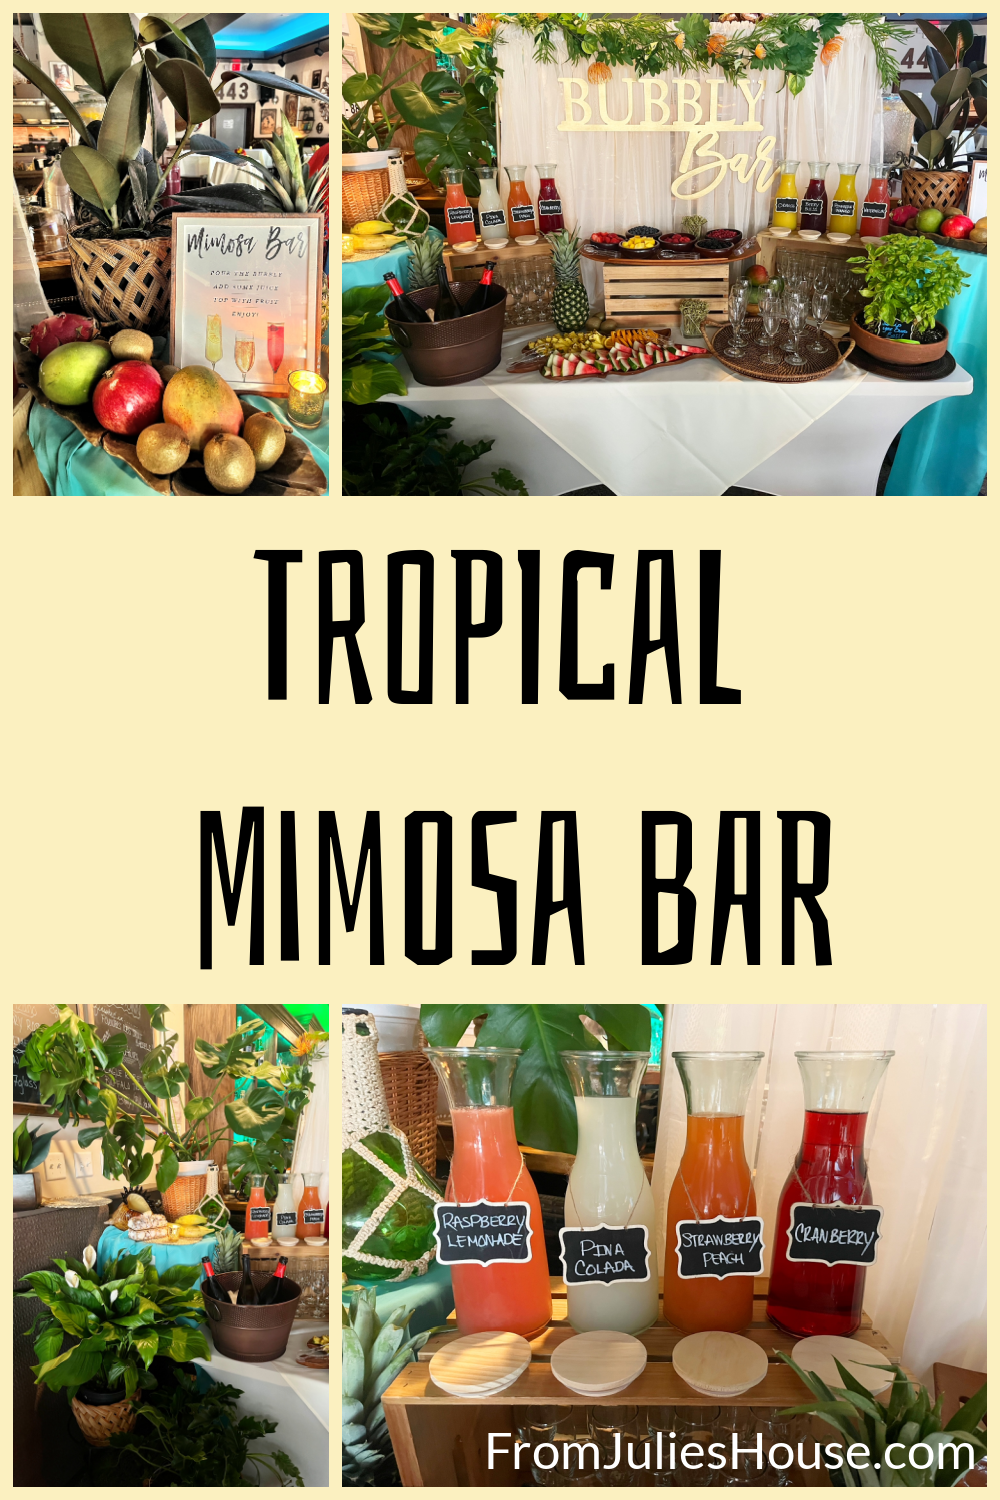 Fun and Affordable Mimosa Bar Ideas